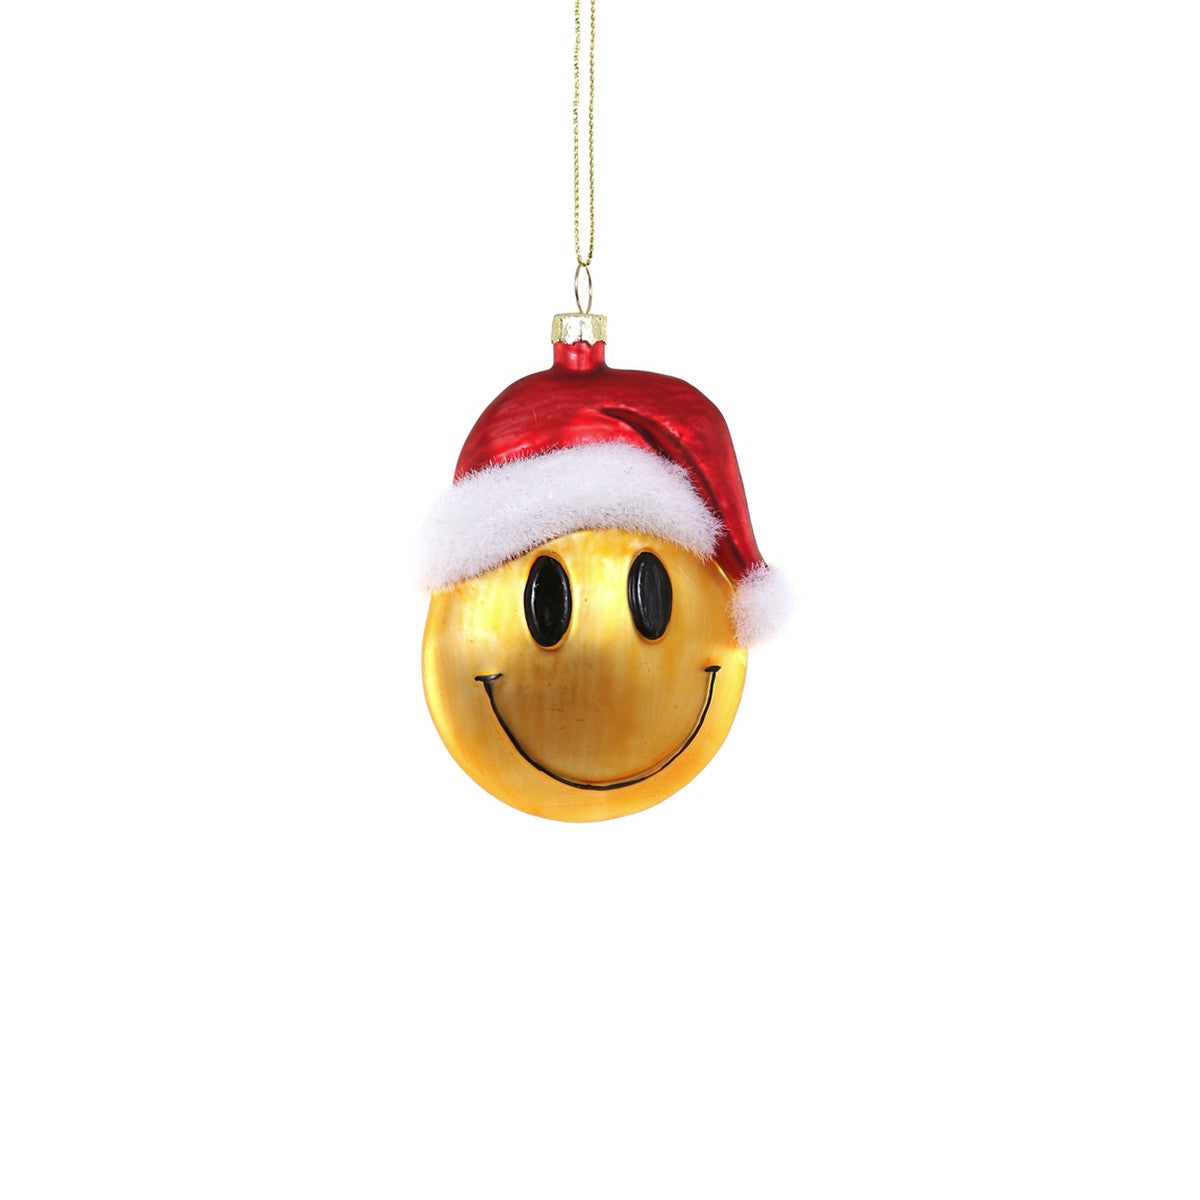 Smiley Santa Ornament